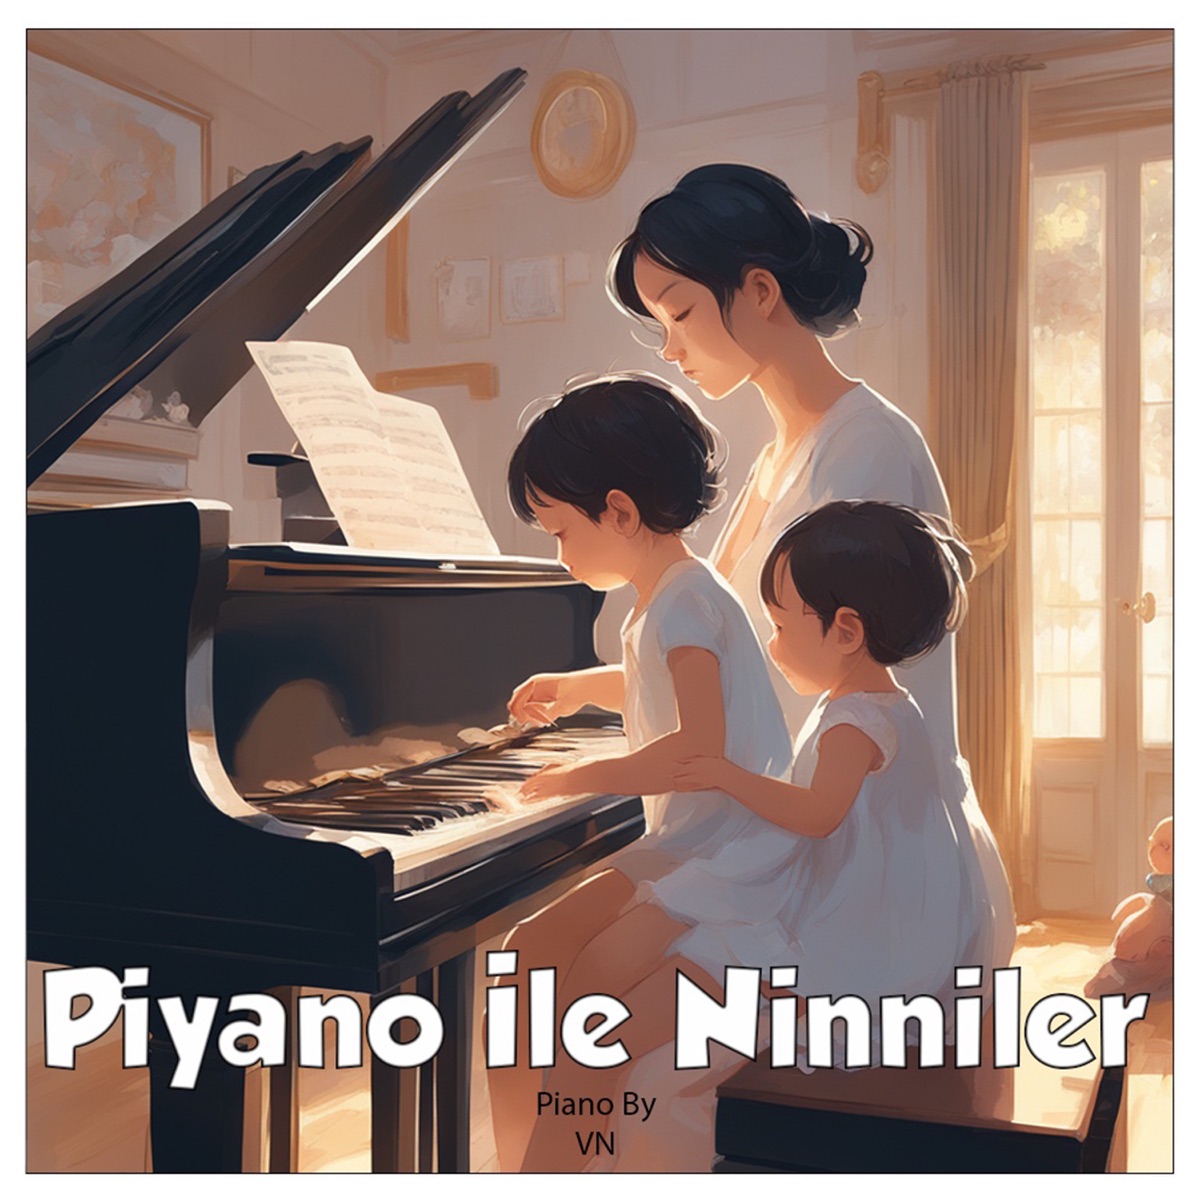 Piyano İle Ninniler - Album by Piano by VN - Apple Music